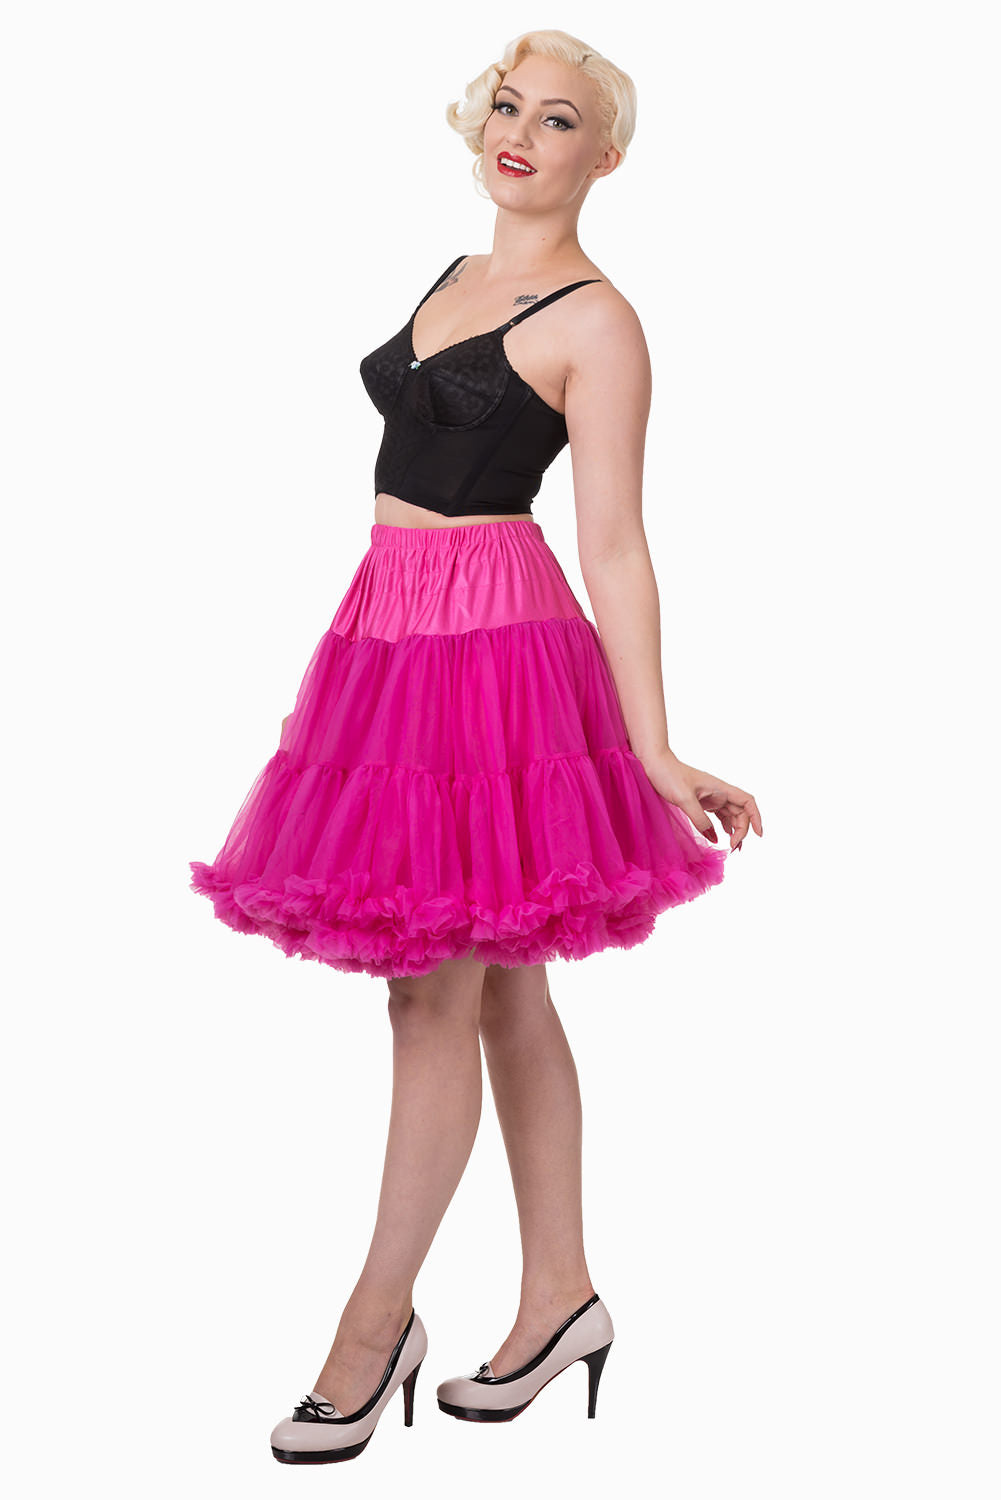 Walkabout Petticoat in Hot Pink - Natasha Marie Clothing